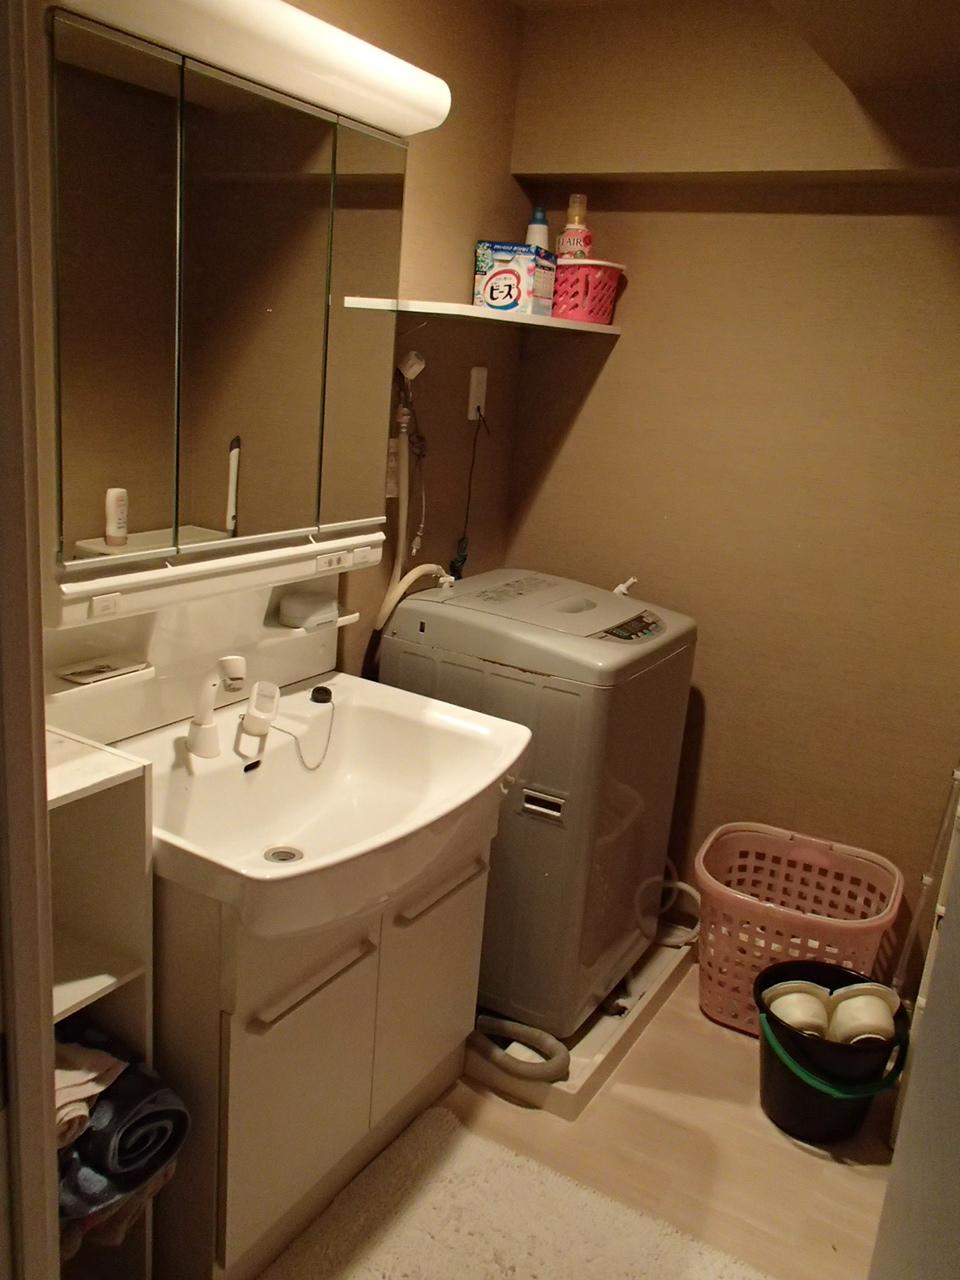 Wash basin, toilet. Wash basin is a three-sided mirror.